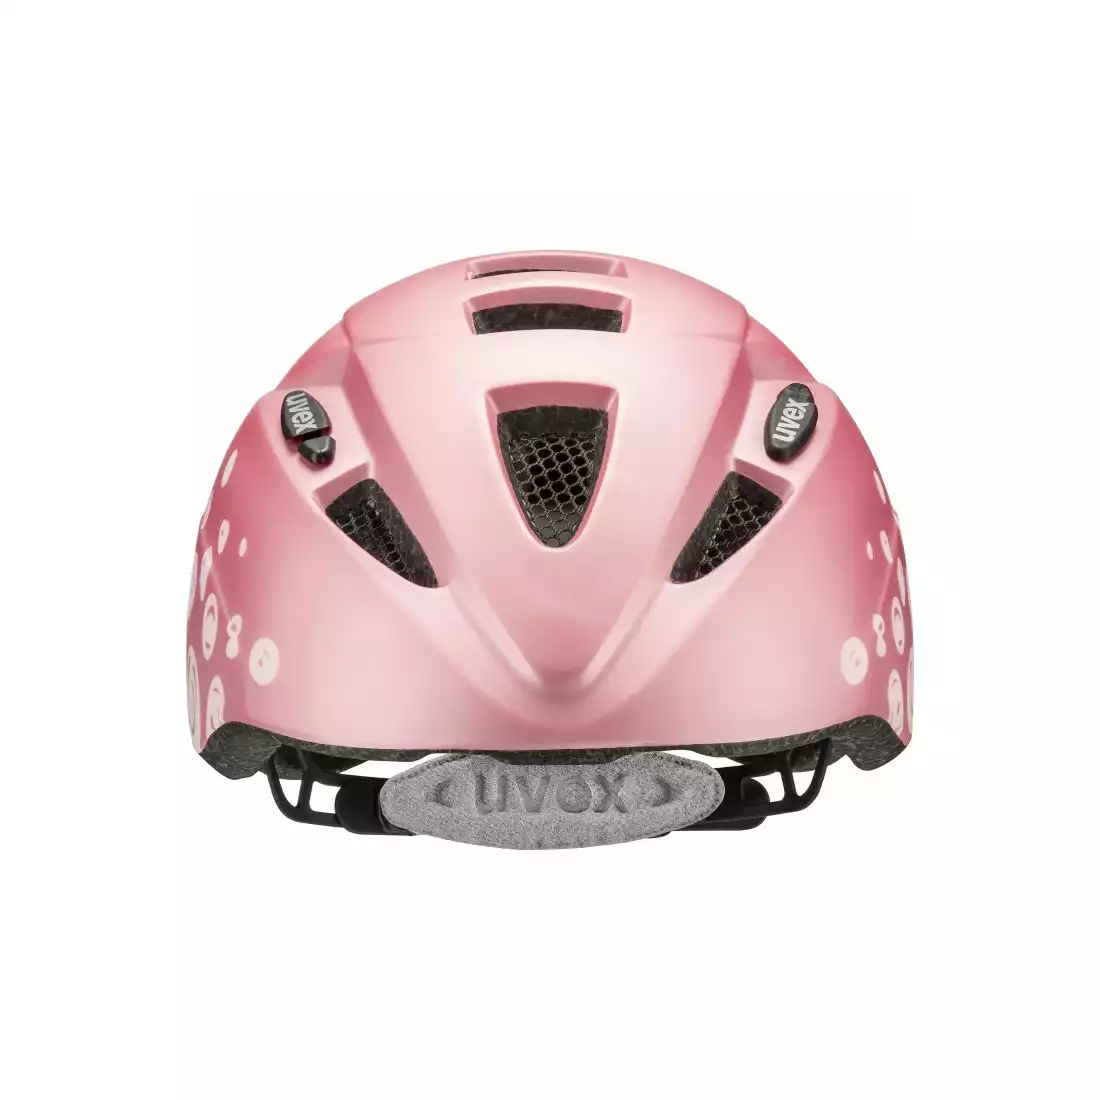  UVEX Kid 2 cc detská cyklistická pink polka dots